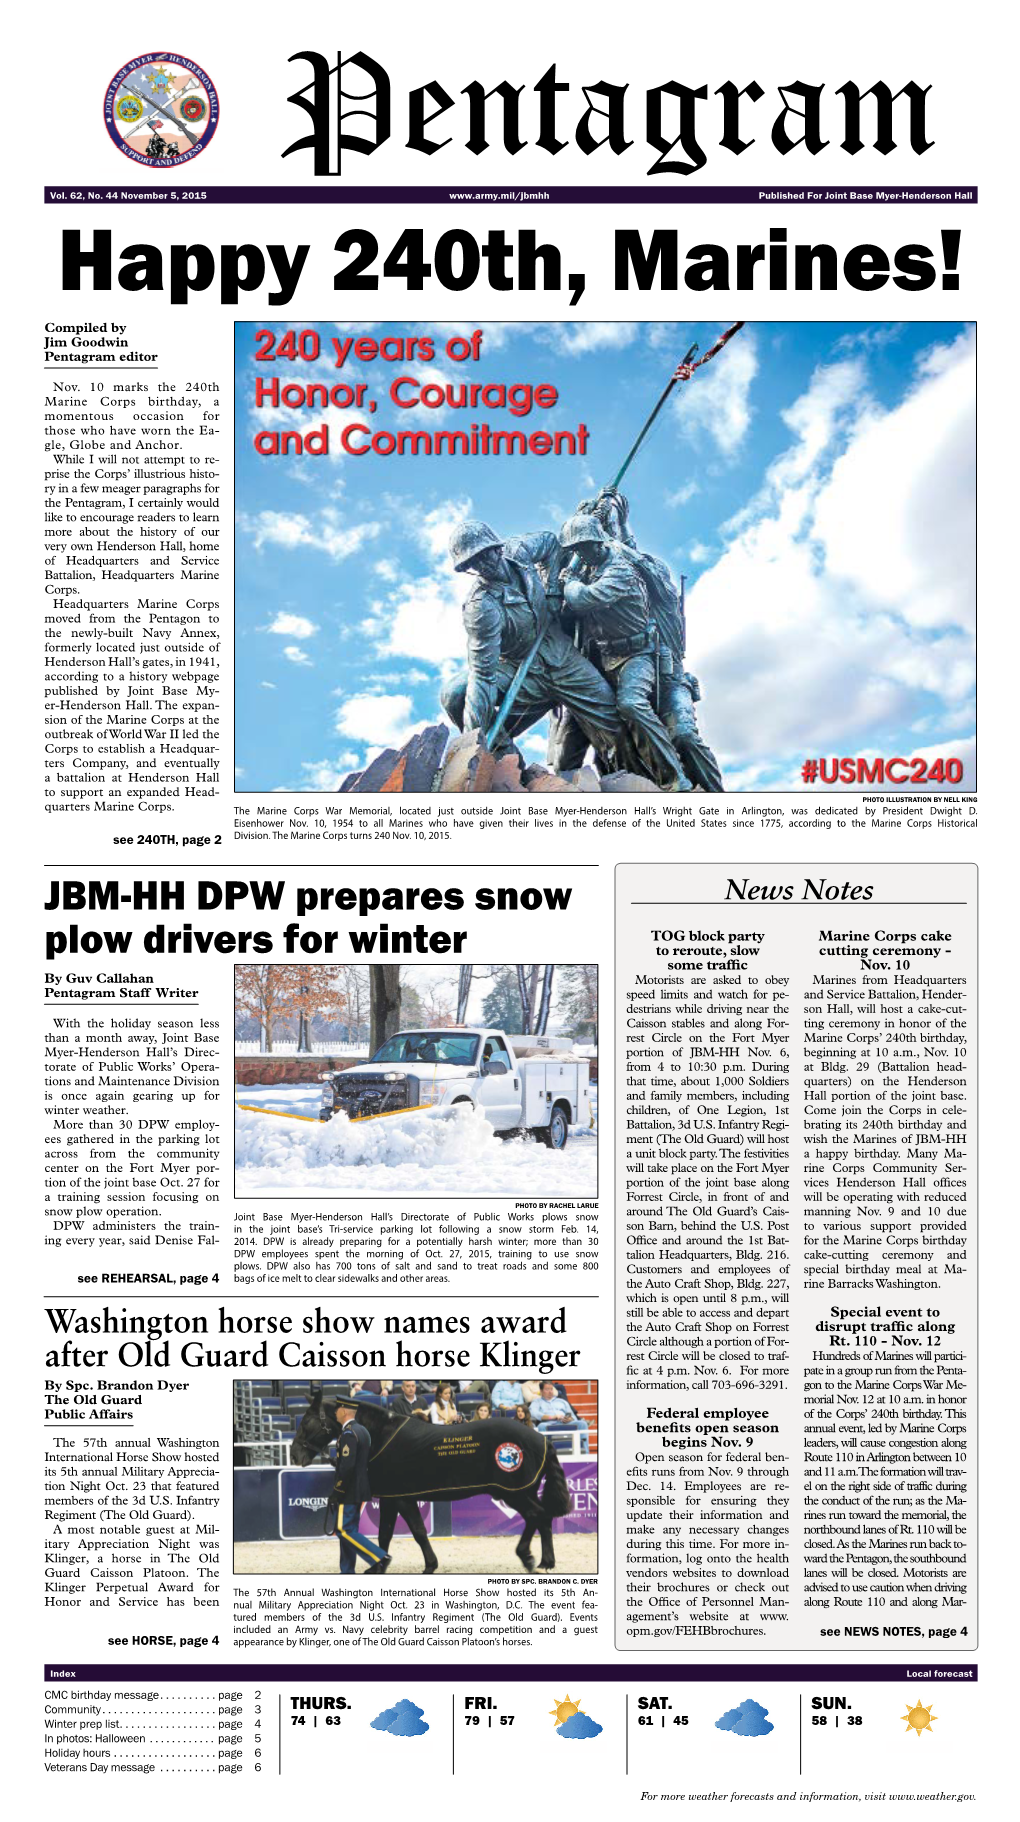 JBM-HH DPW Prepares Snow Plow Drivers for Winter